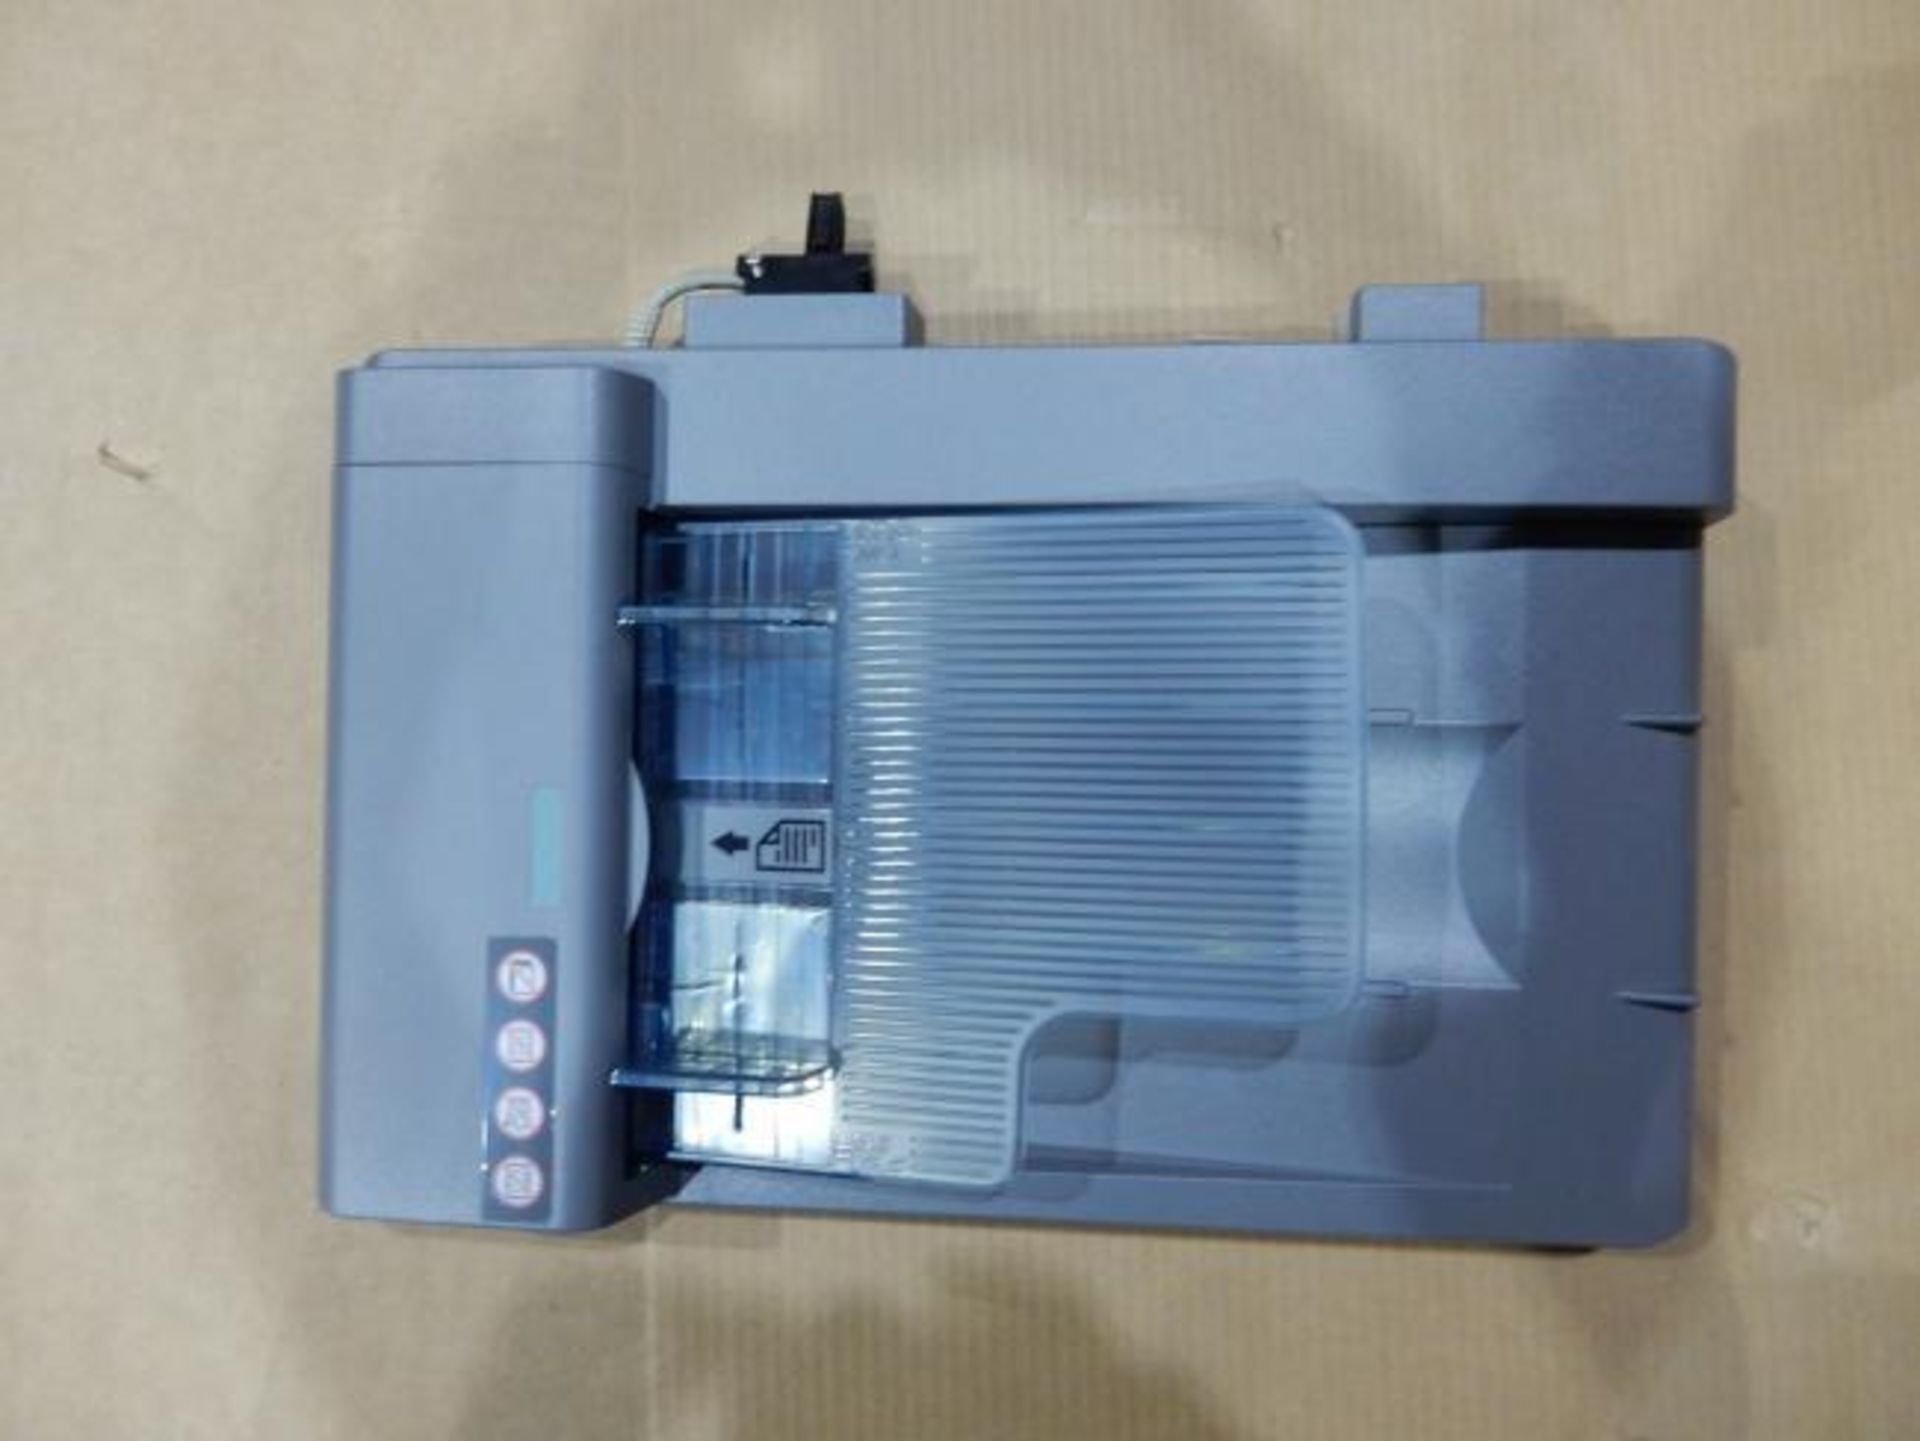 Konica Minolta Auto Document Feeder AF-11 printer - Image 3 of 4